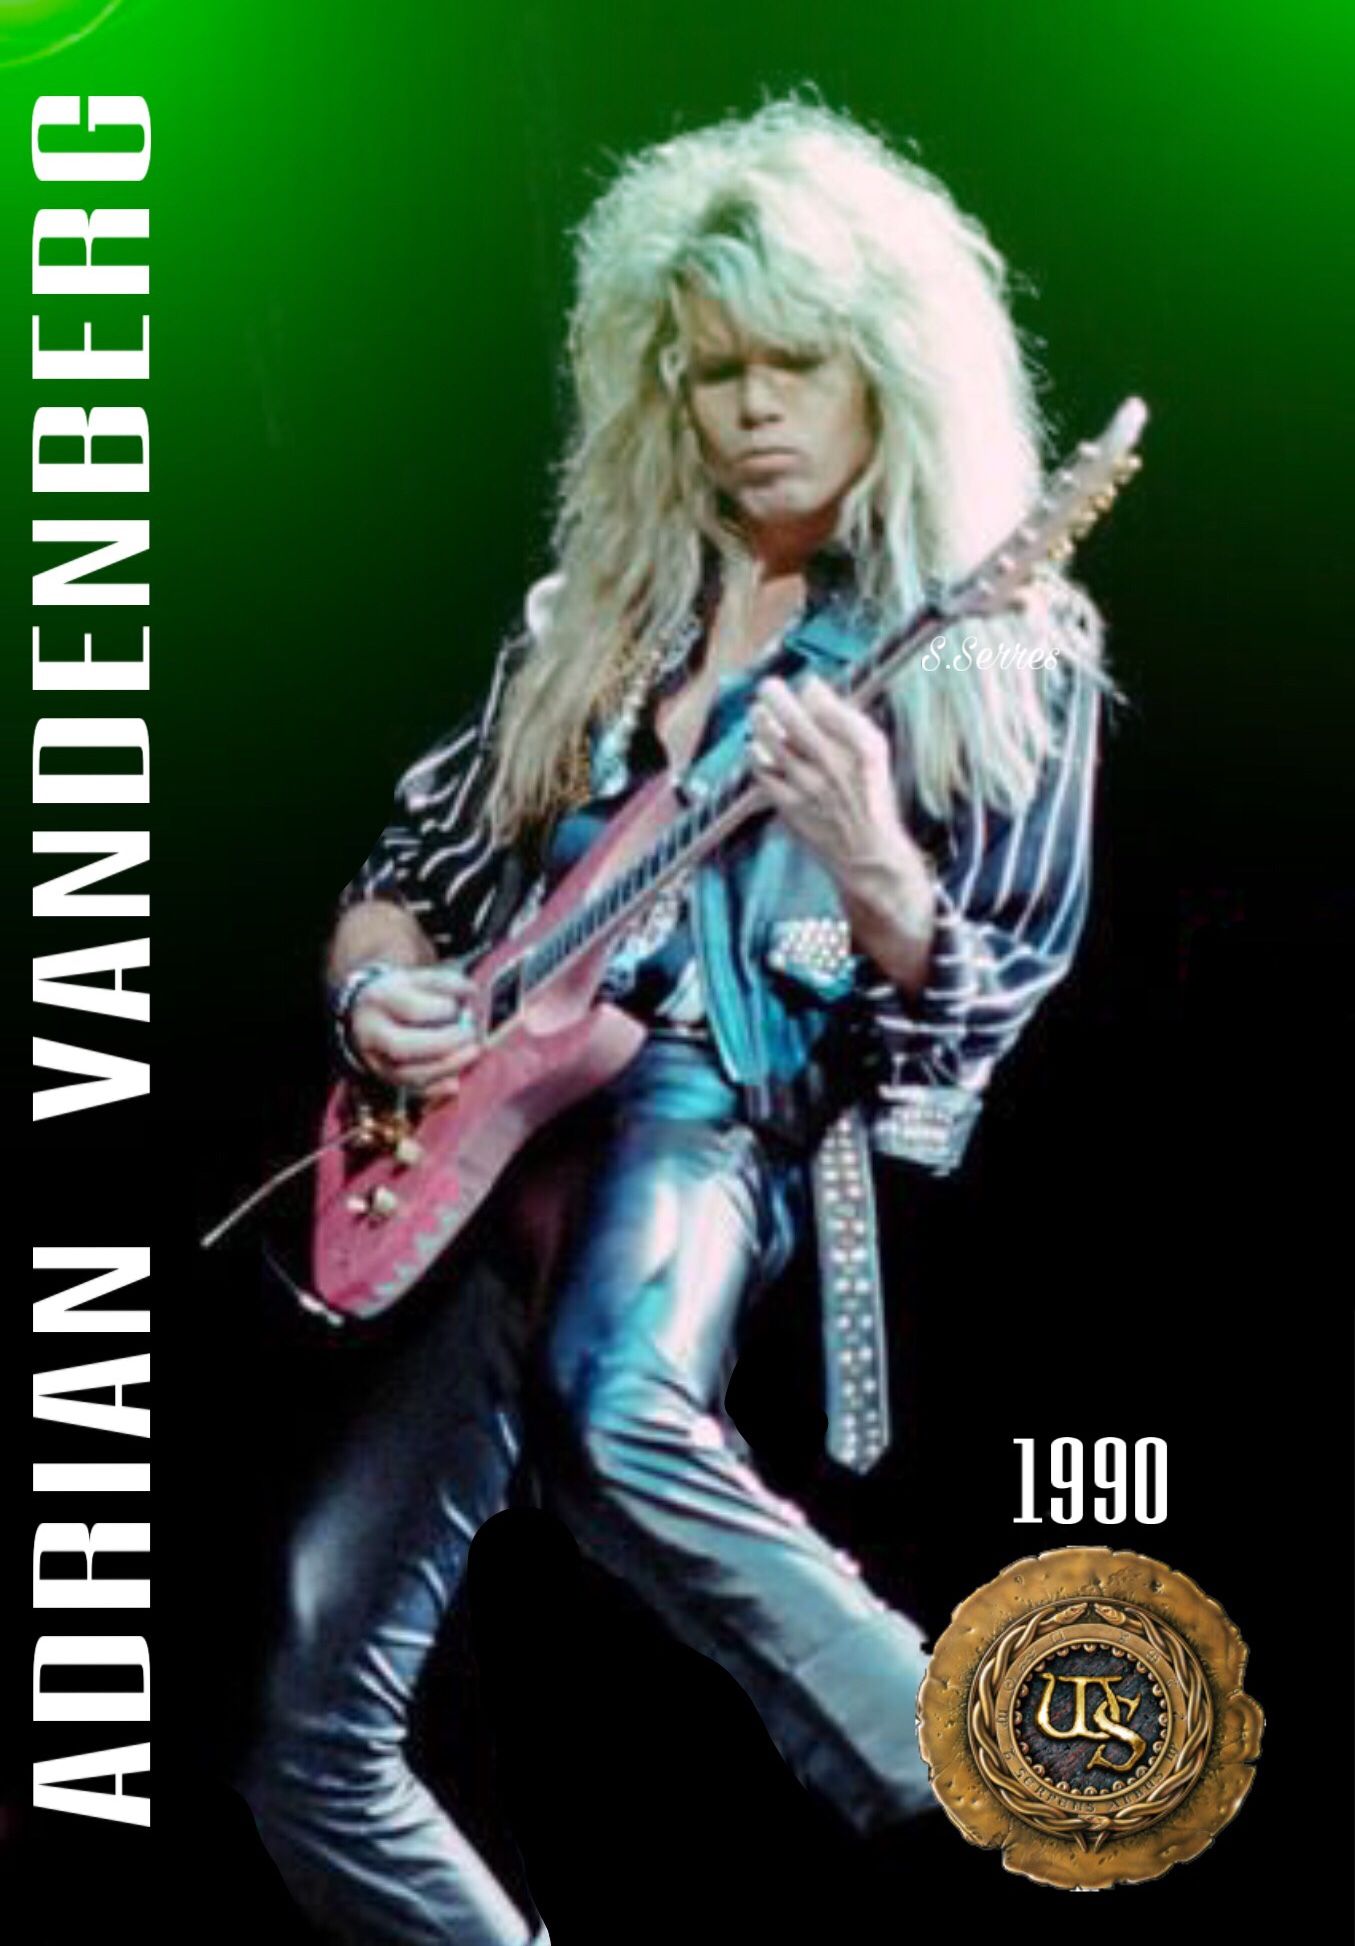 Happy Birthday to Vandenberg and former Whitesnake Guitarist Adrian Vandenberg. He turns 67 today. 